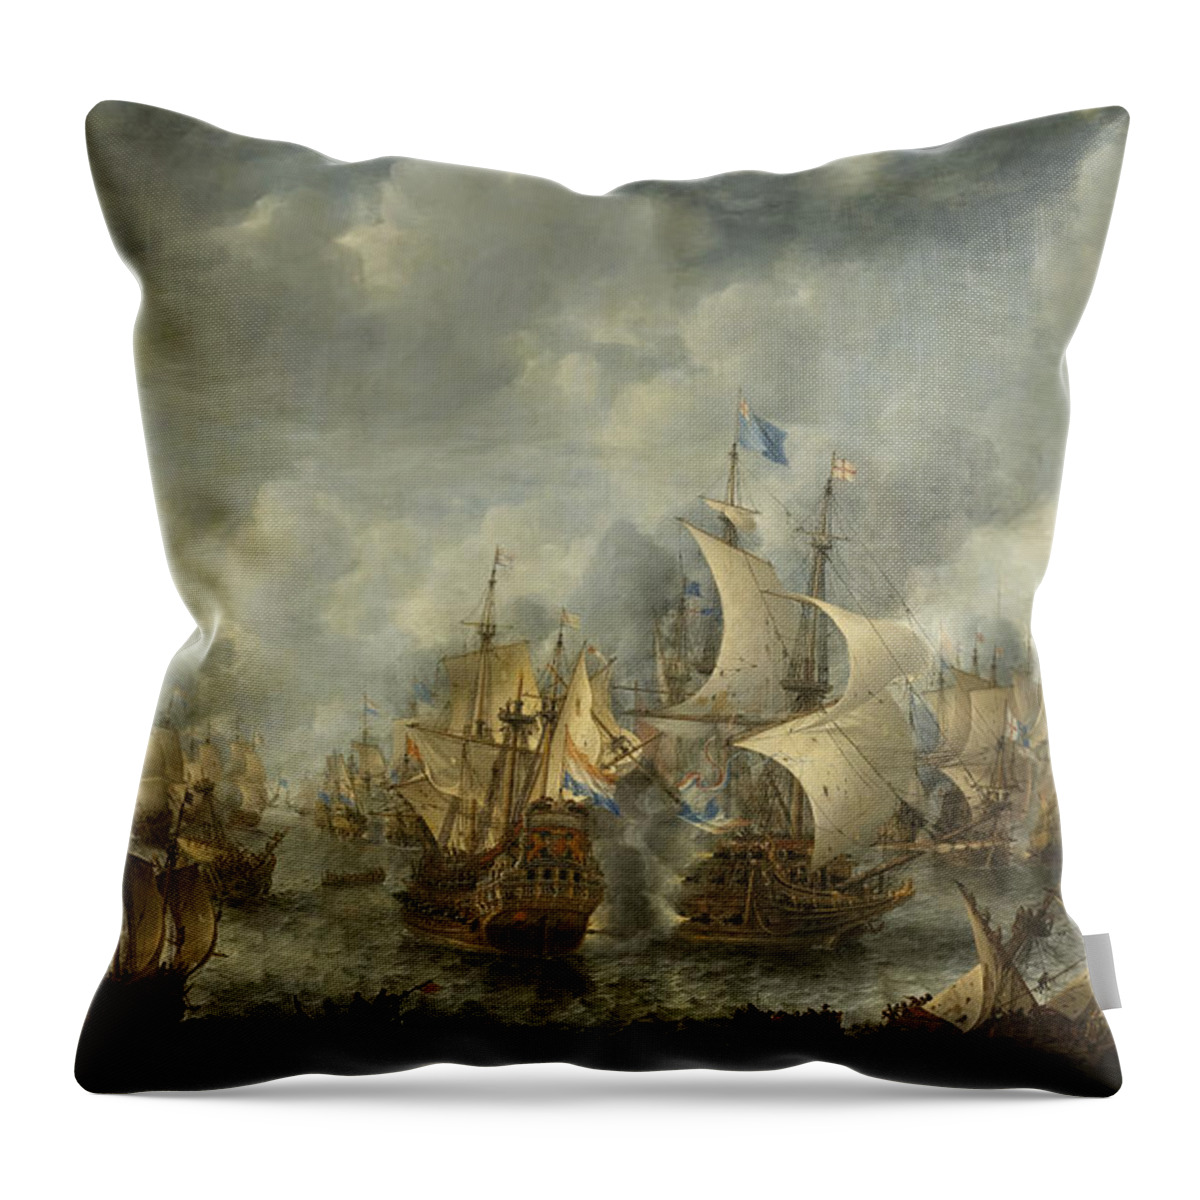 Pirates Throw Pillow featuring the painting Battle Of Scheveningen by Jan Abrahamsz Beerstraaten